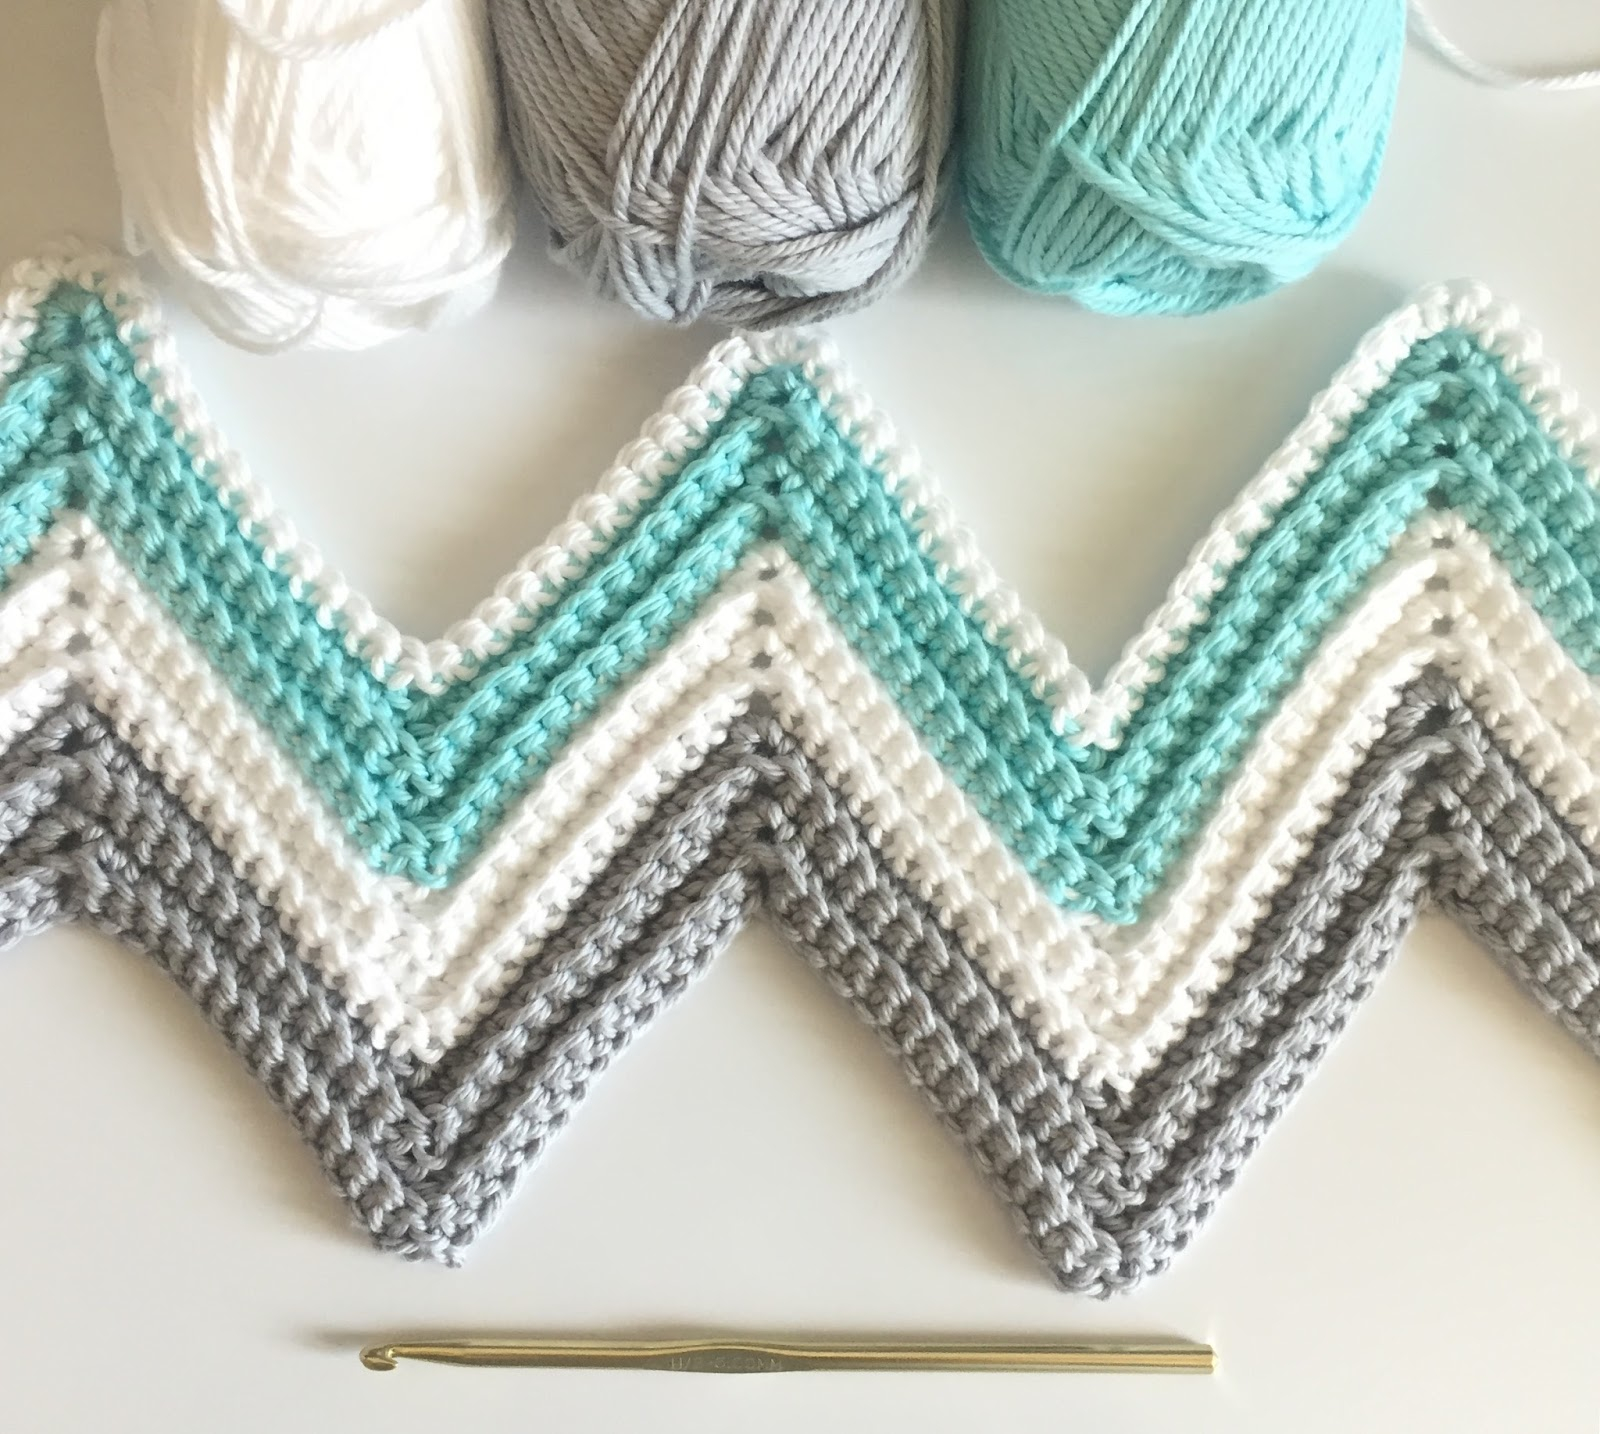 Crochet Chevron Baby Blanket Free Pattern Single Crochet Chevron Blanket In Mint Gray And White Daisy Farm